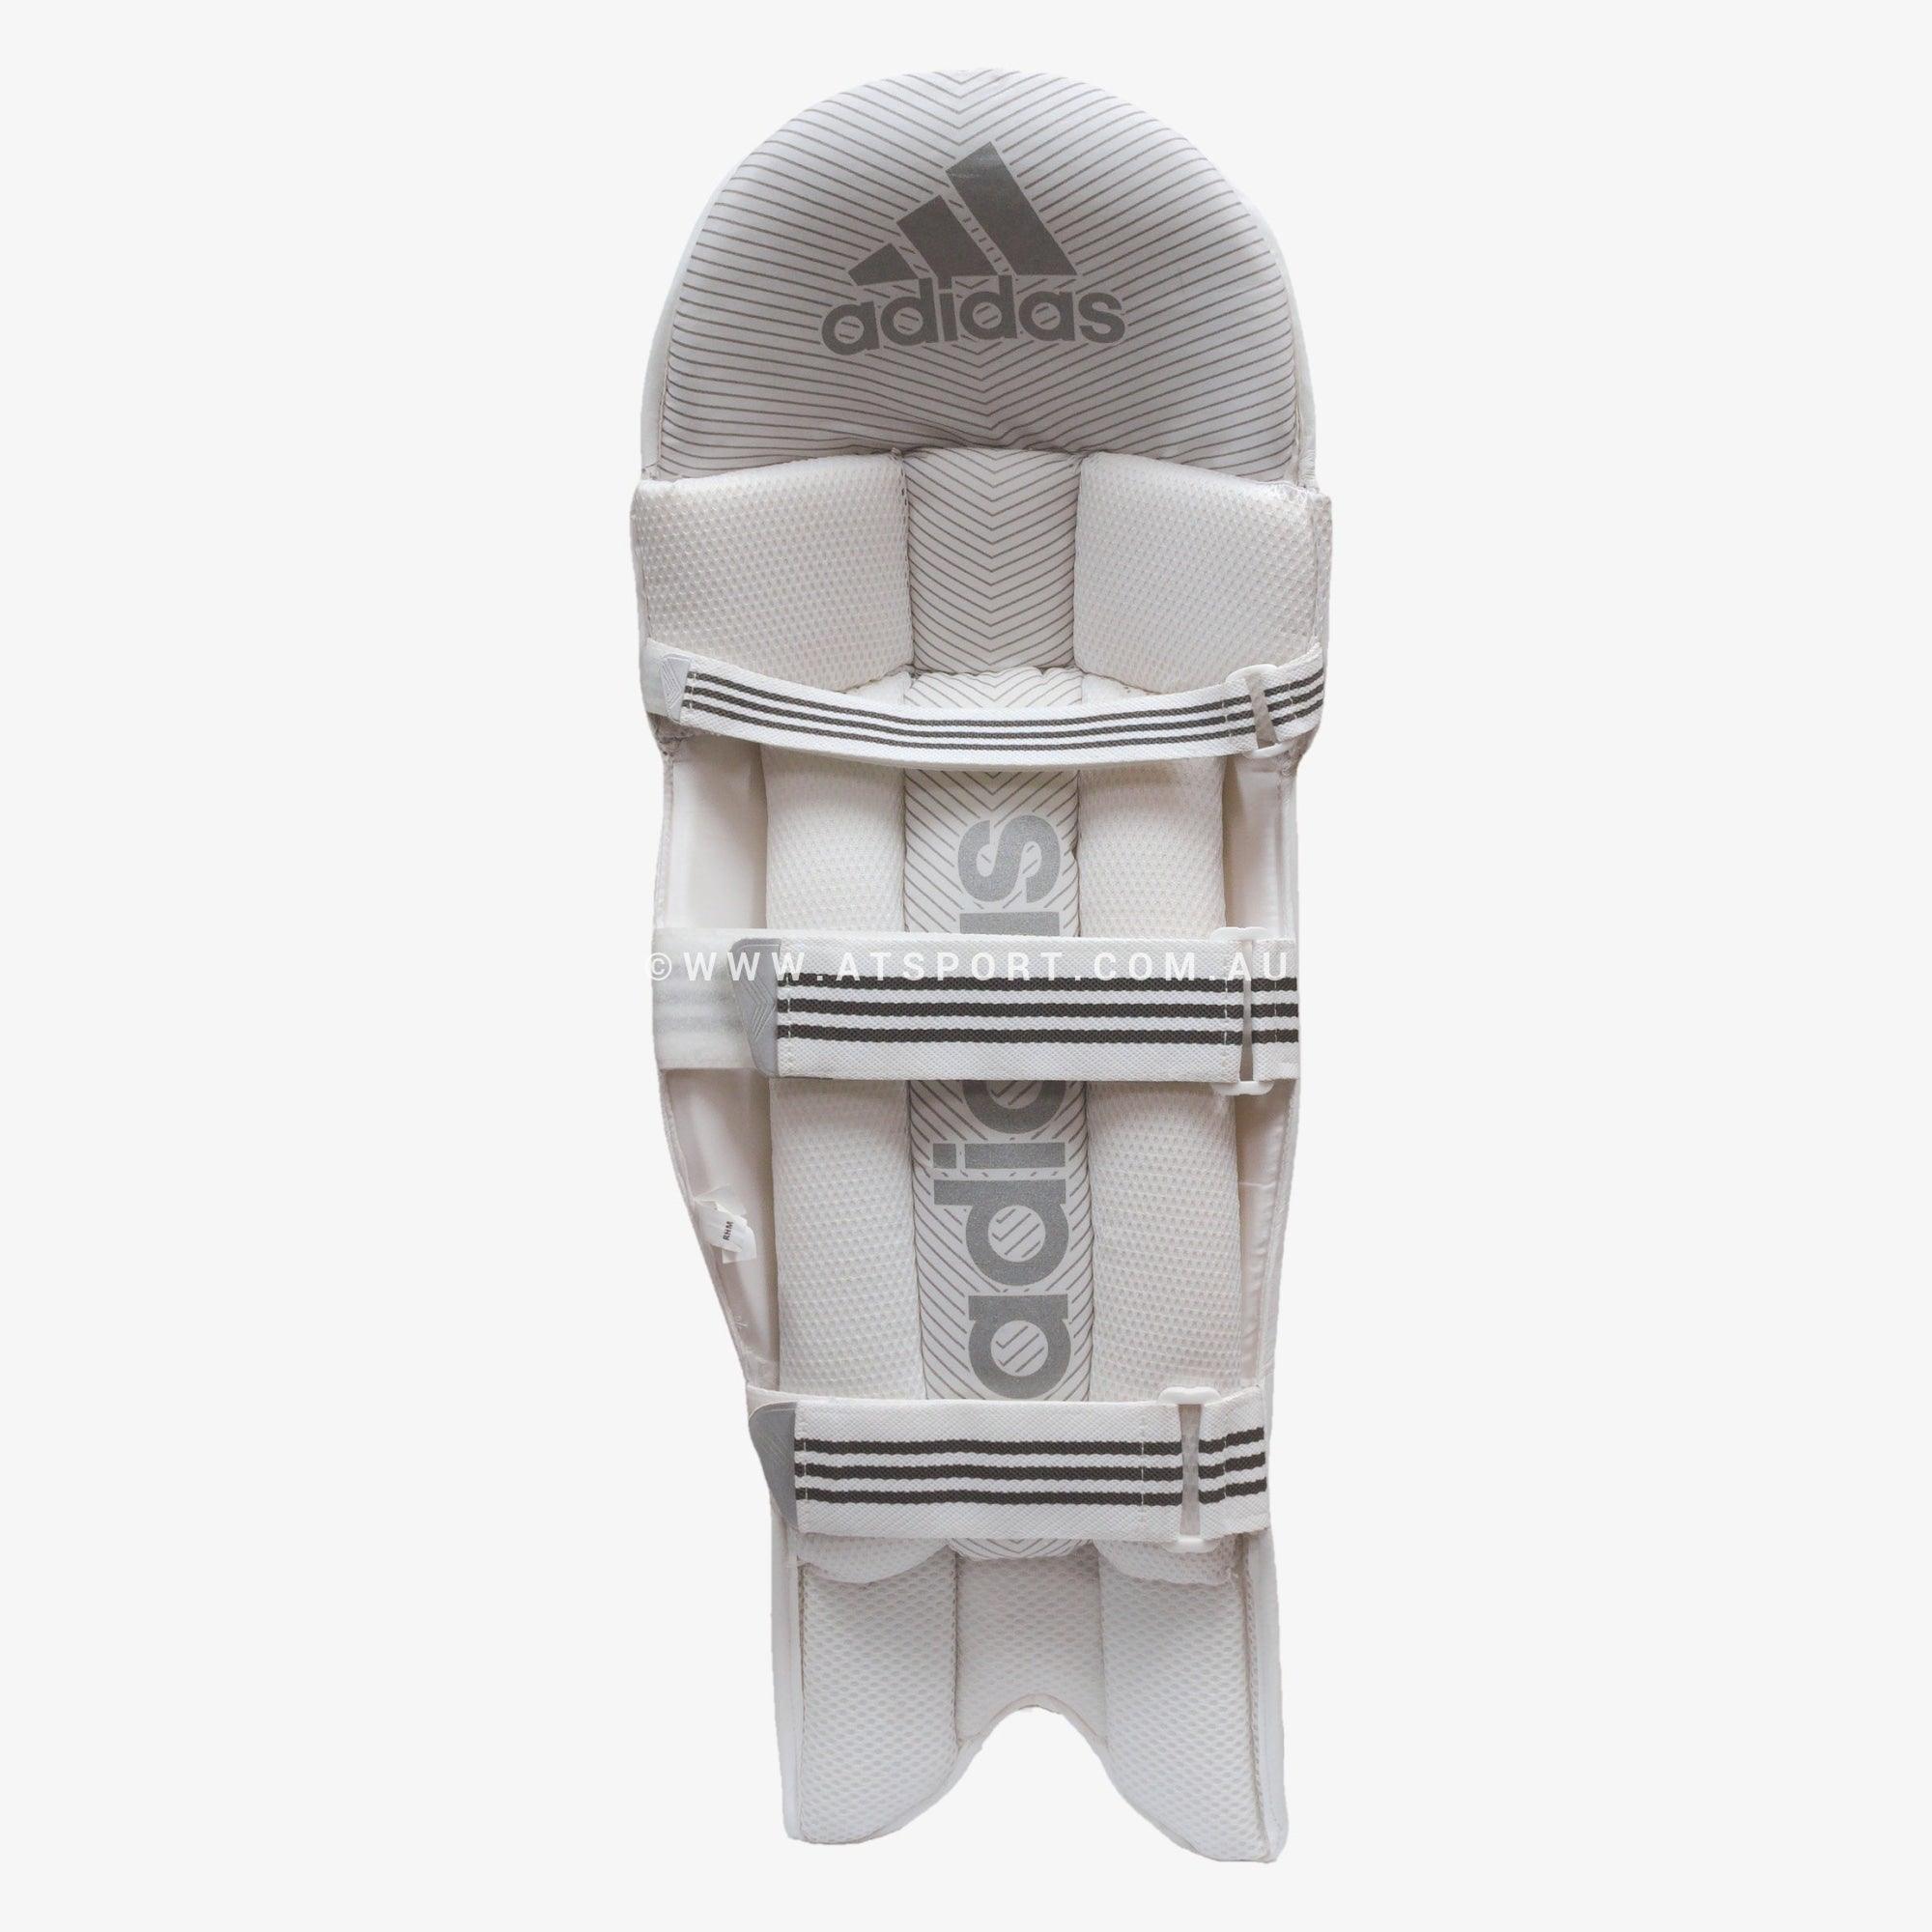 Adidas XT 3.0 Cricket Batting Pads - SMALL ADULT - AT Sports